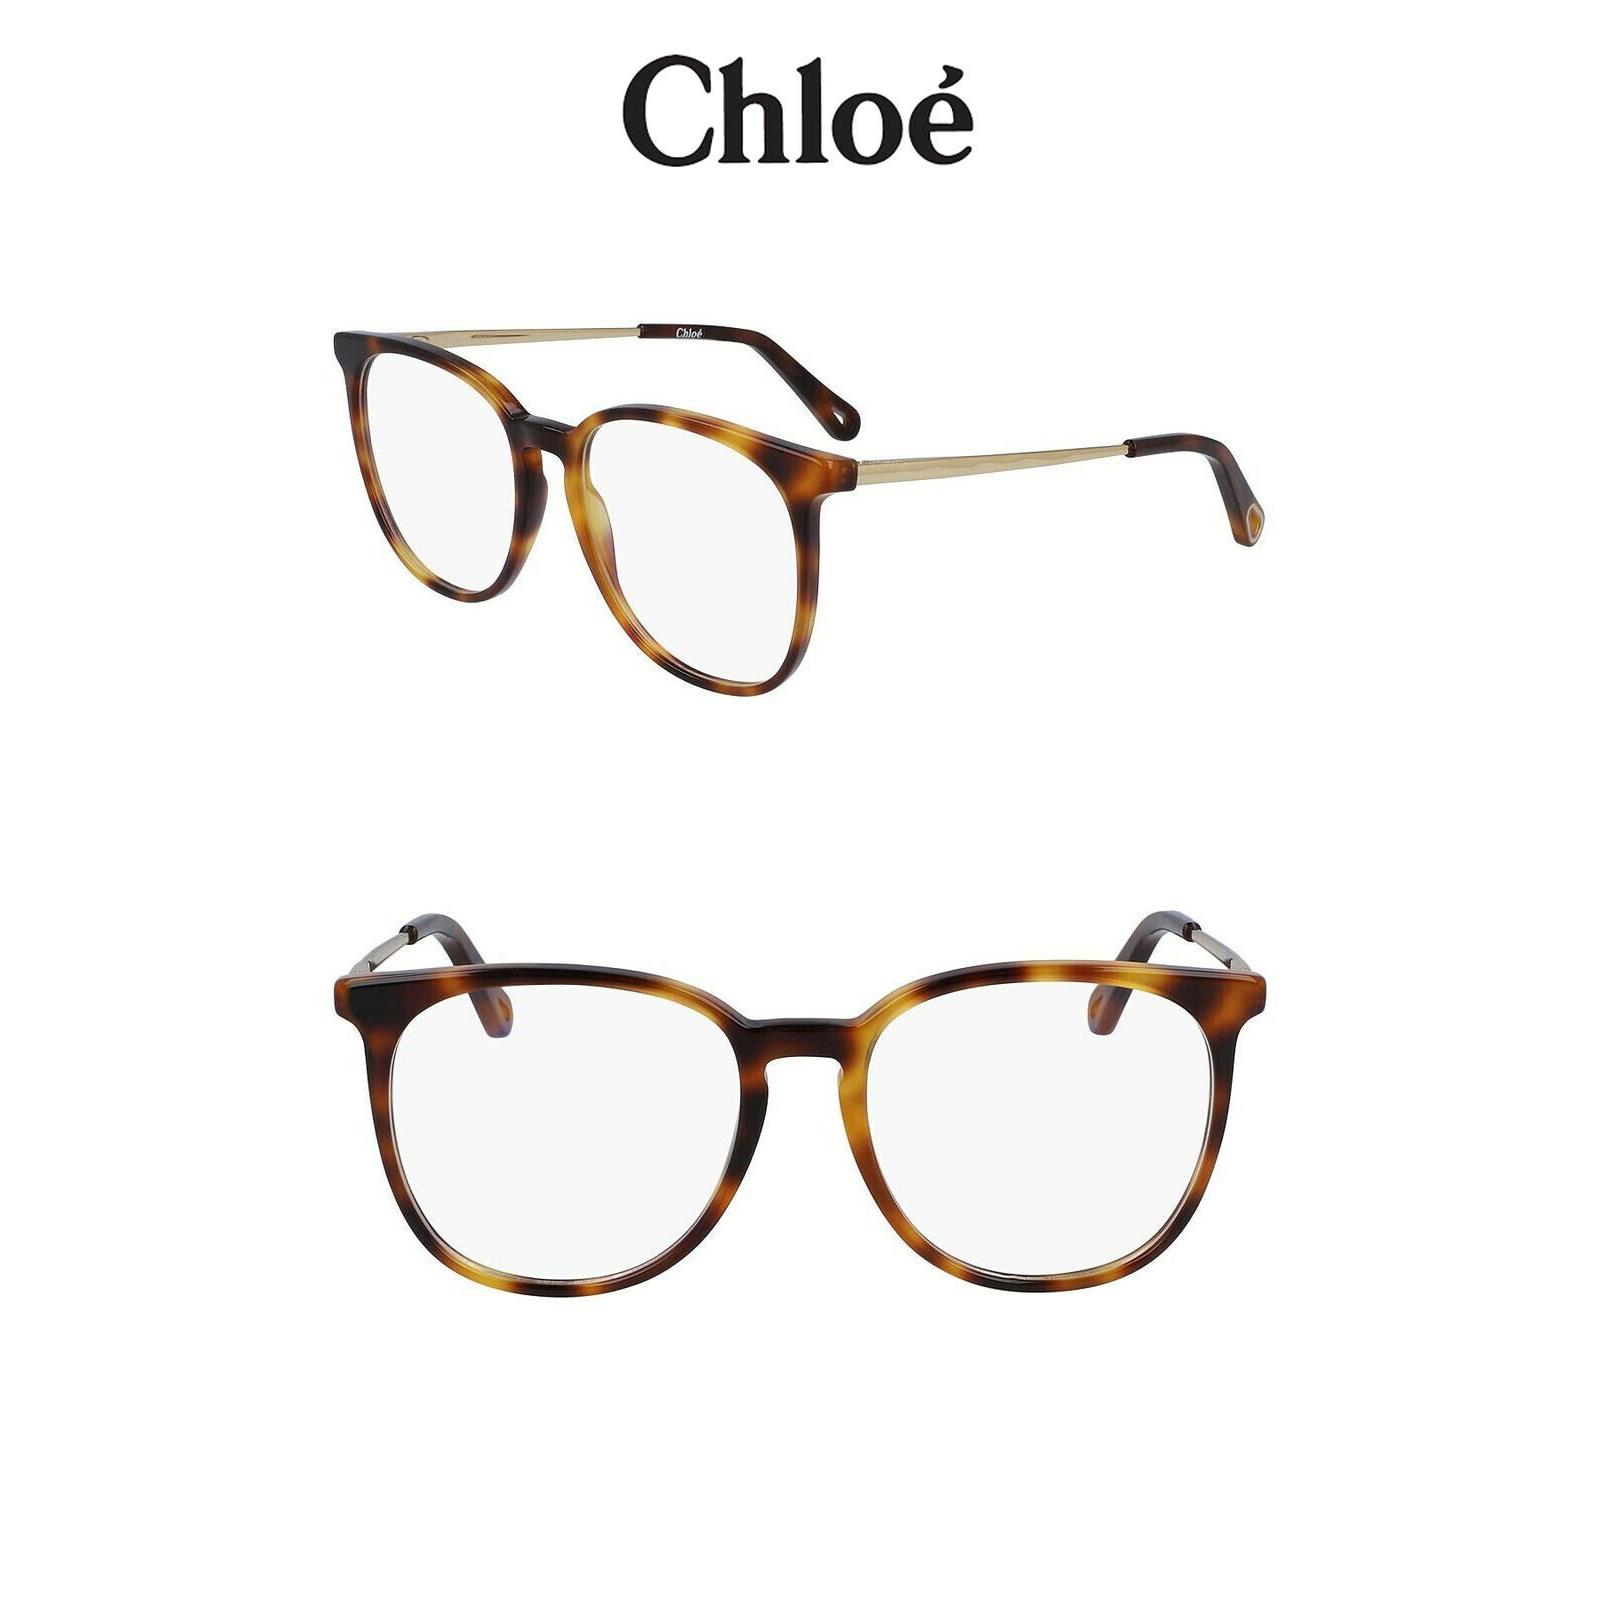 Chloé Brand - Shop Chloé fashion accessories | Fash Brands - Page 11